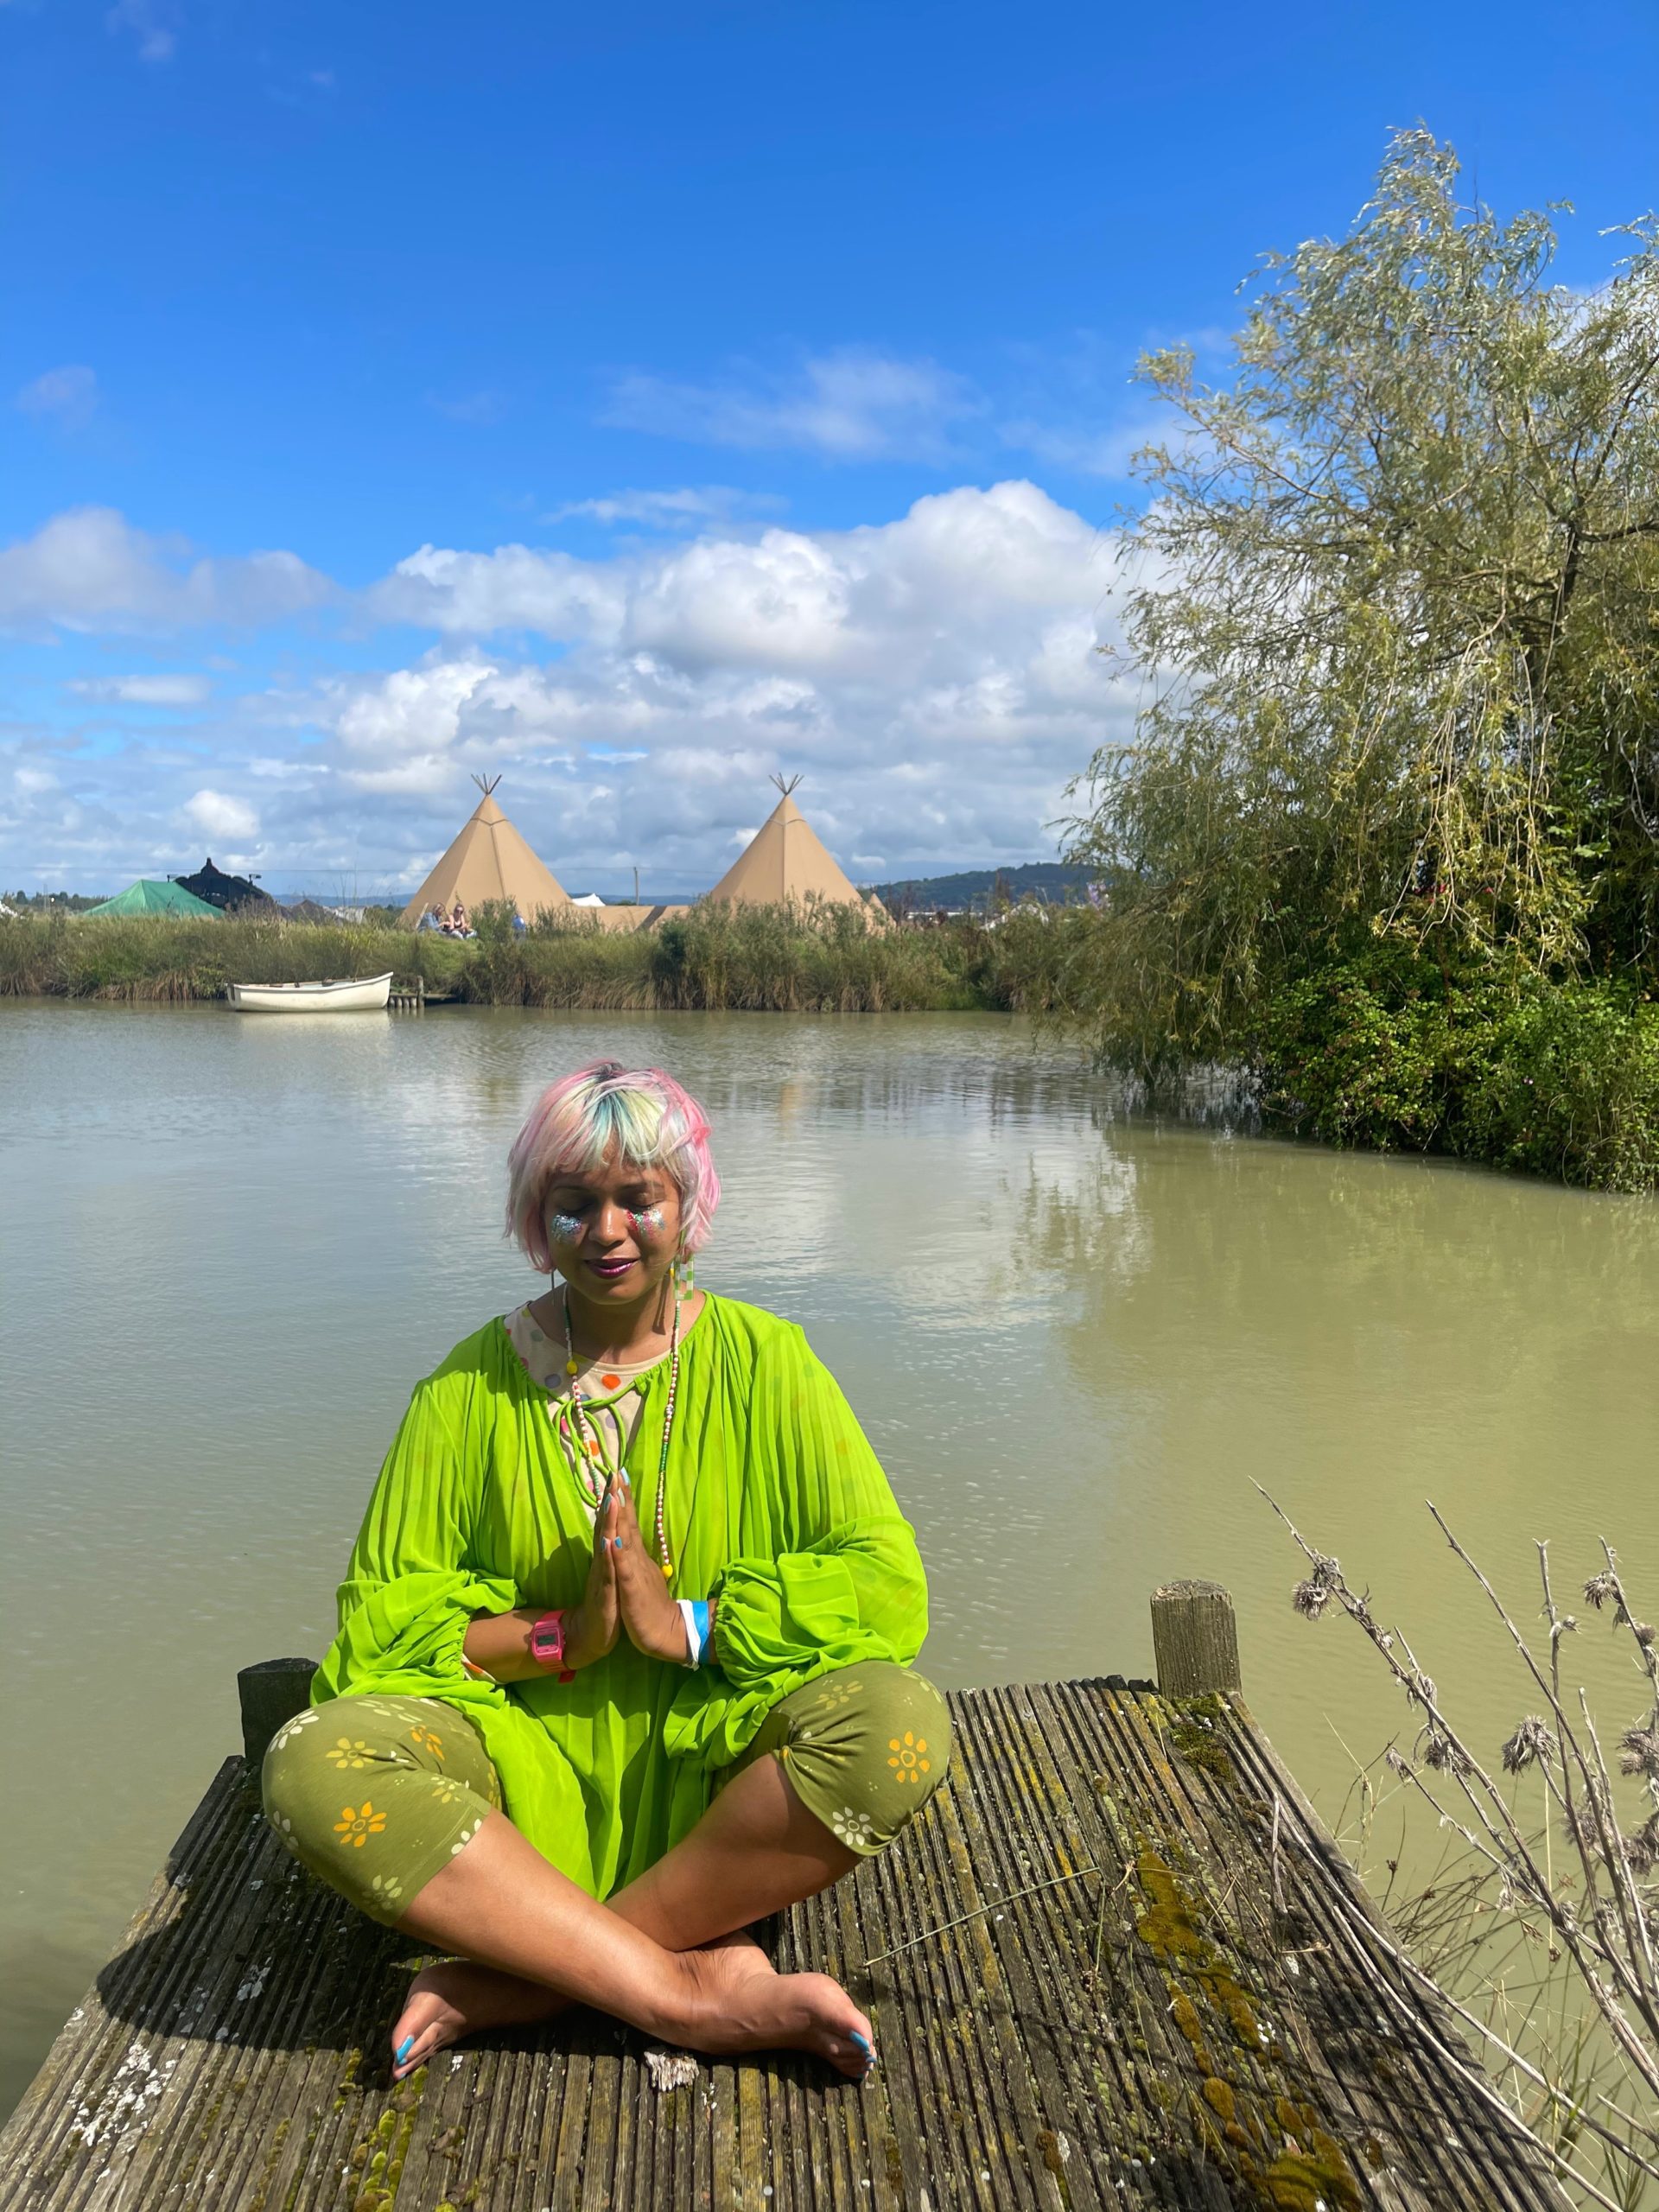 Momtaz sat crossed legging hands in prayer position meditation in front of a lake